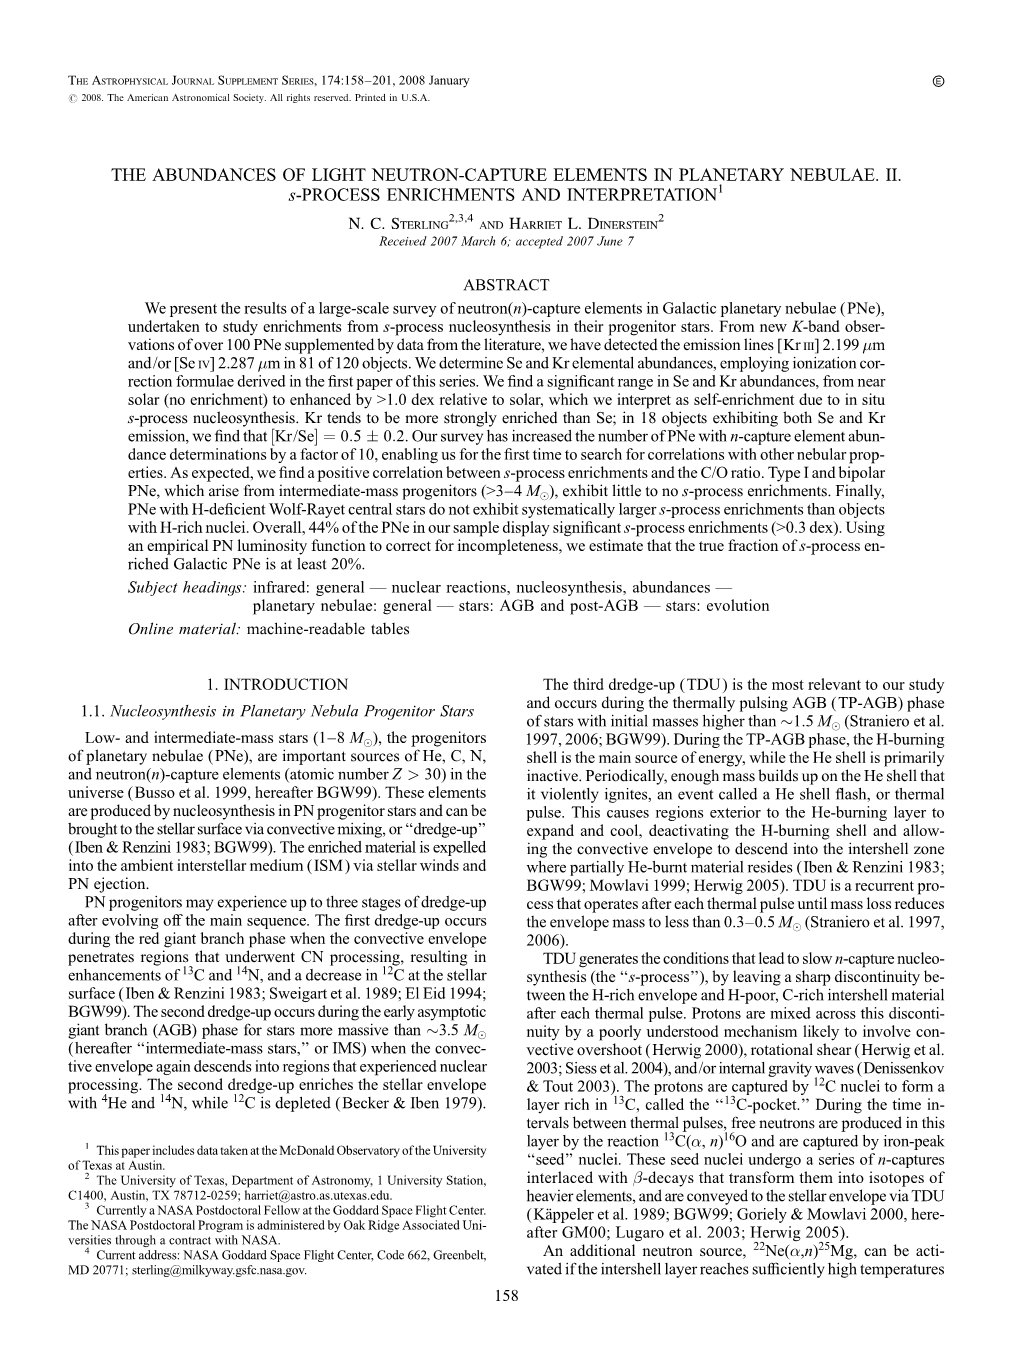 THE ABUNDANCES of LIGHT NEUTRON-CAPTURE ELEMENTS in PLANETARY NEBULAE. II. S-PROCESS ENRICHMENTS and INTERPRETATION1 N